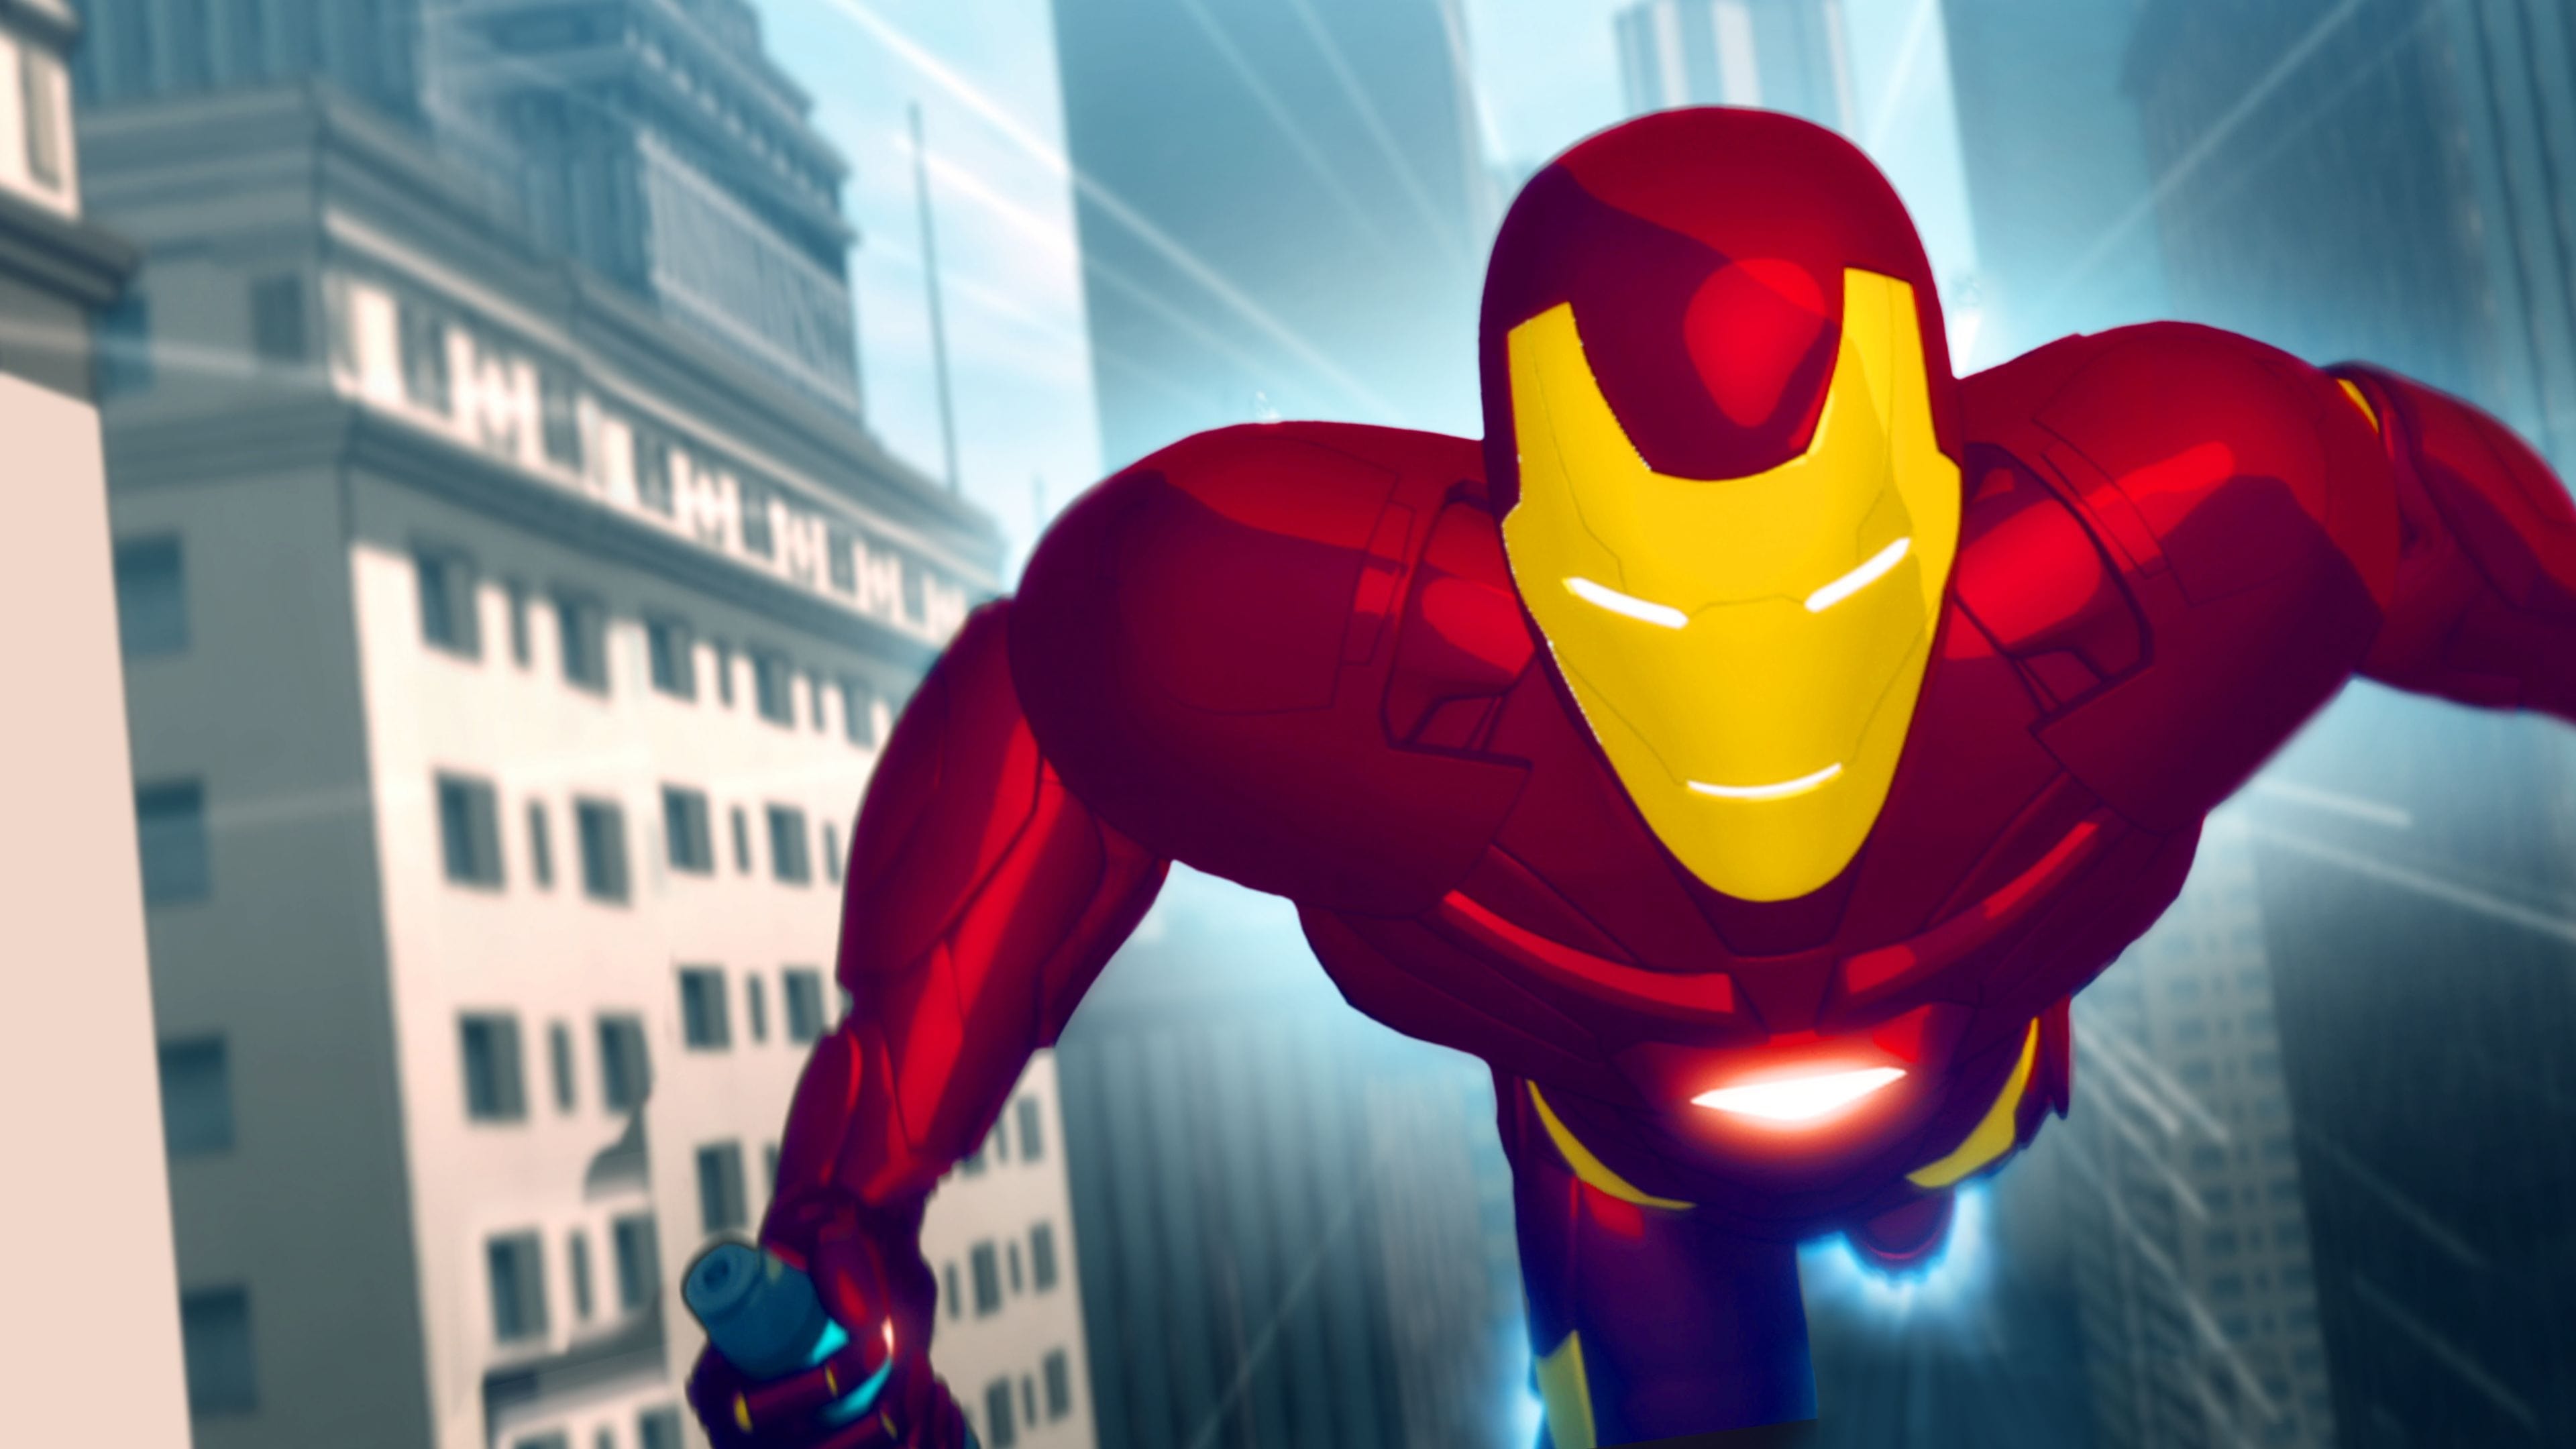 Iron Man - Armored Adventures